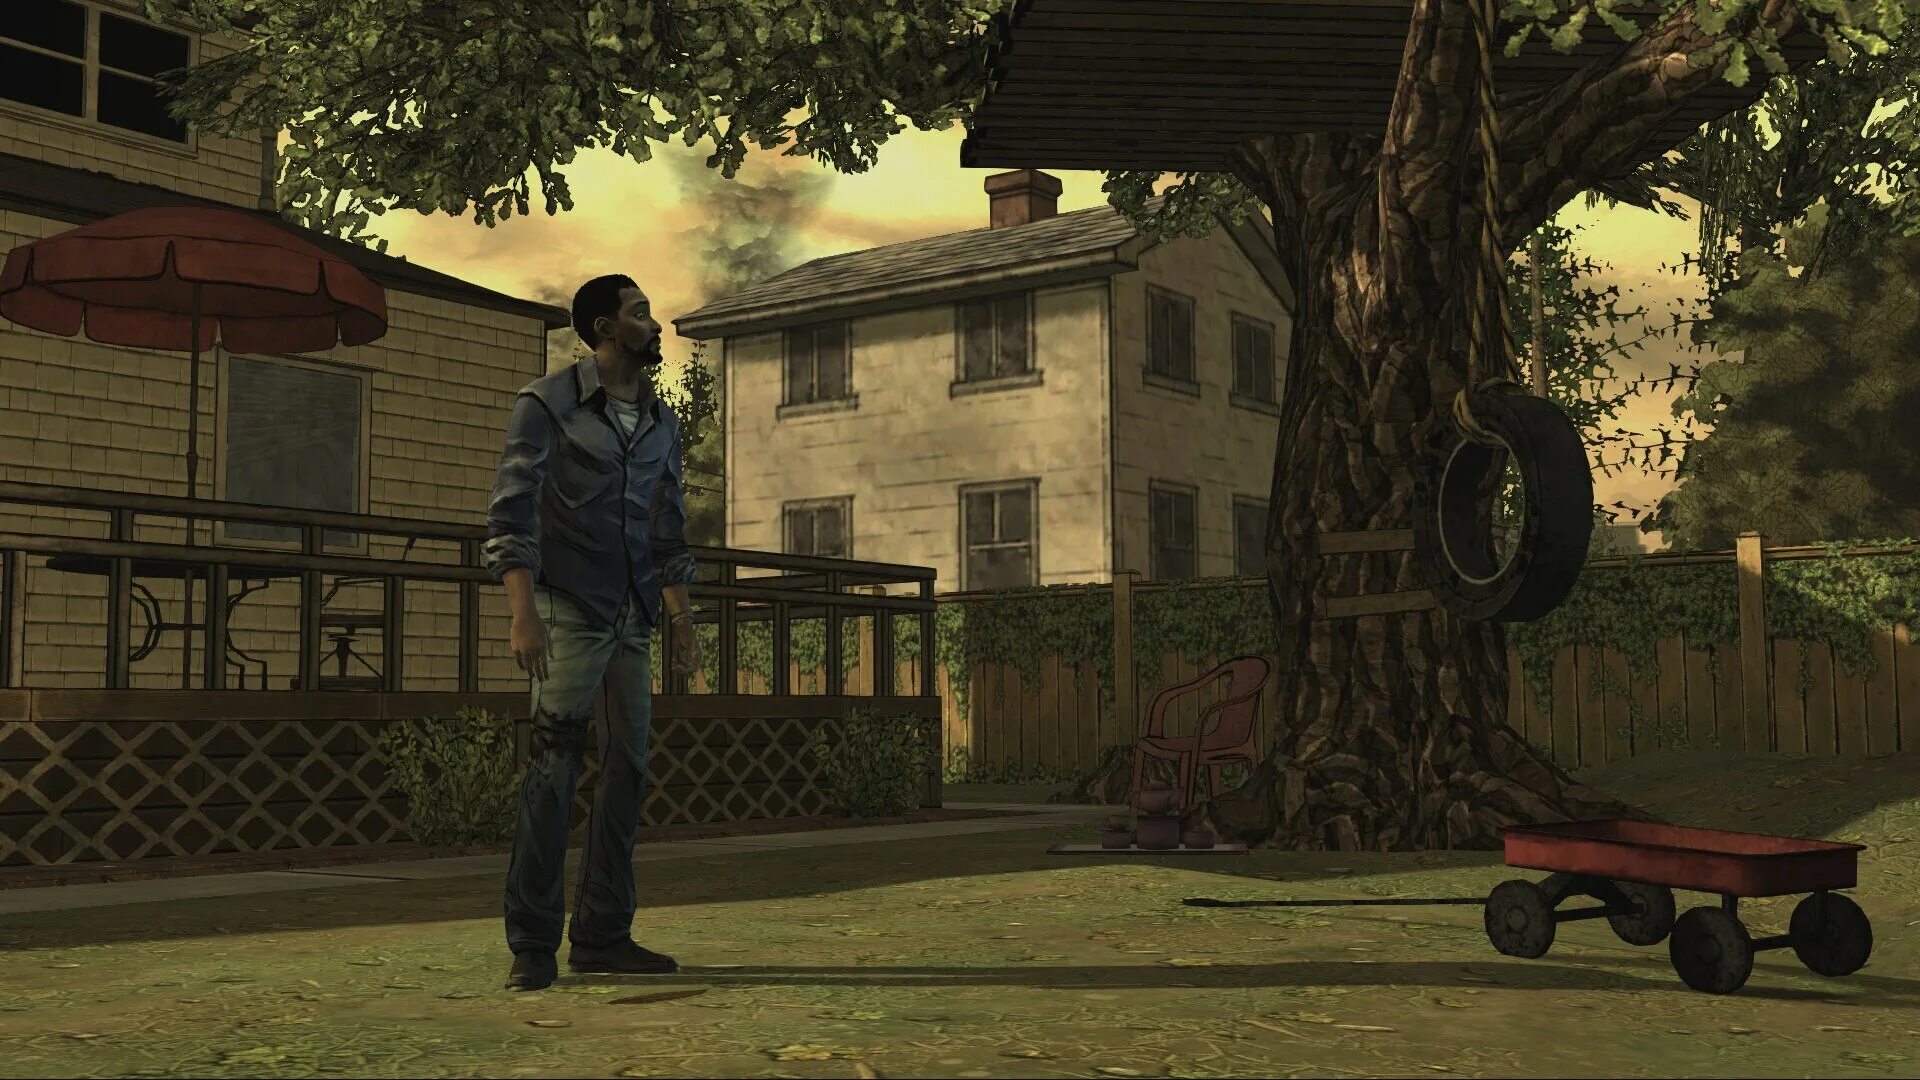 Игра видео дед. The Walking Dead PS Vita. Ходячие мертвецы игра геймплей. Ходячие мертвецы игра Vita.